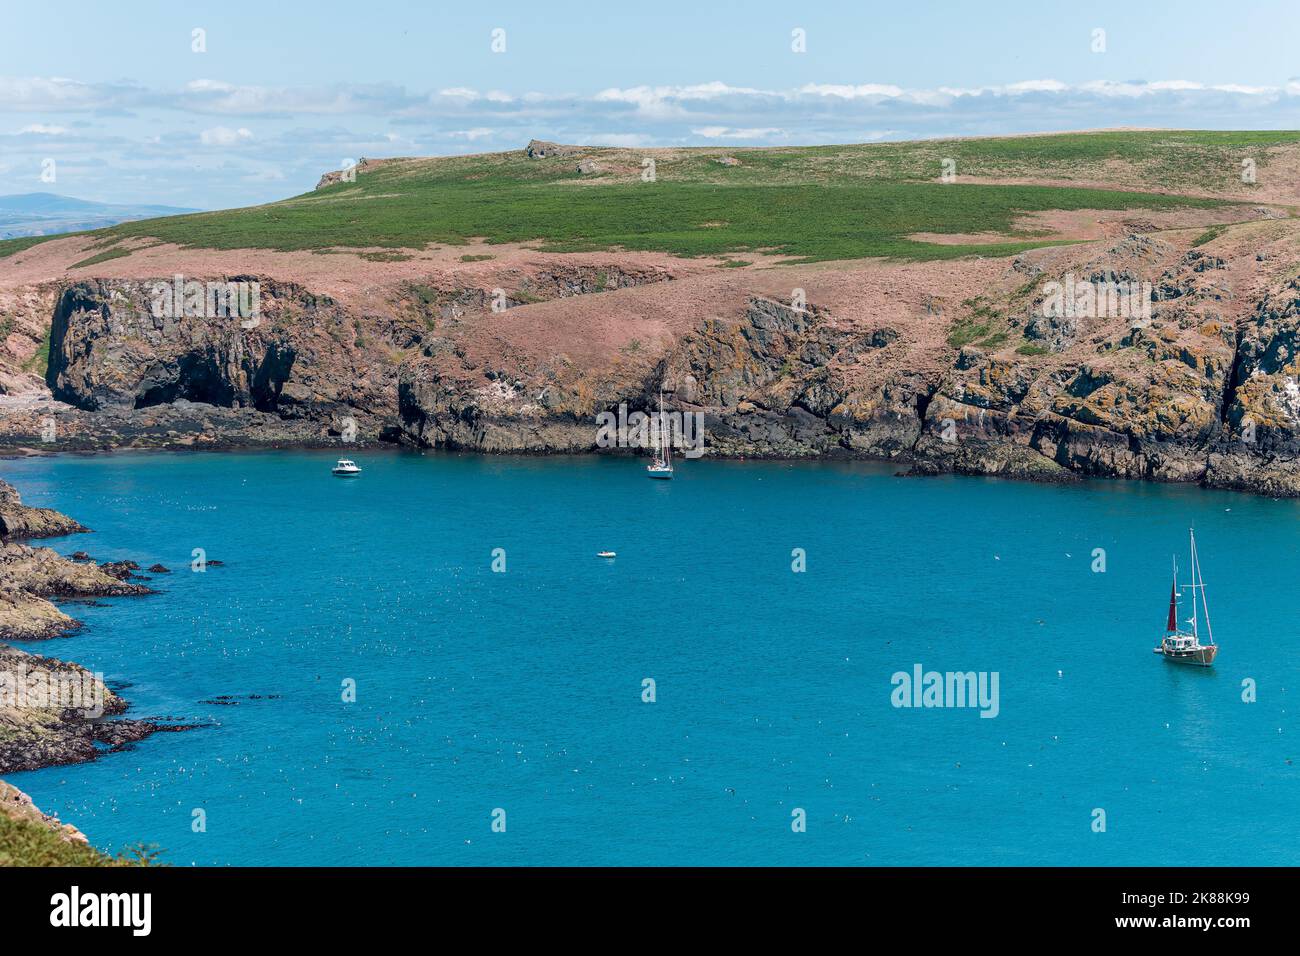 The marine and wildlife reserve of Skomer Island off the west coast of Wales, UK Stock Photo